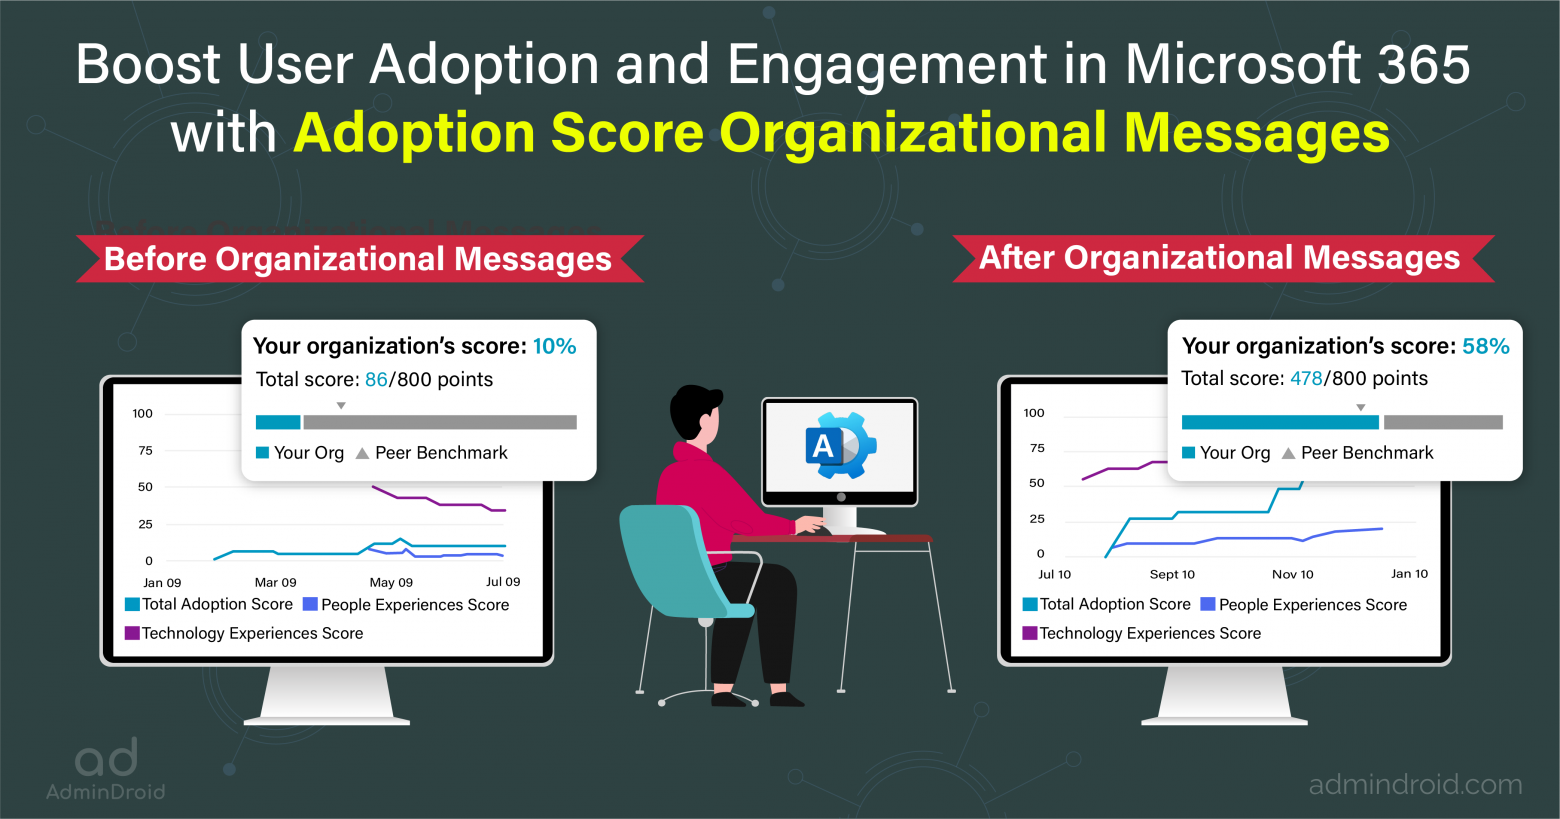 Adoption Score Organizational Messages in Microsoft 365